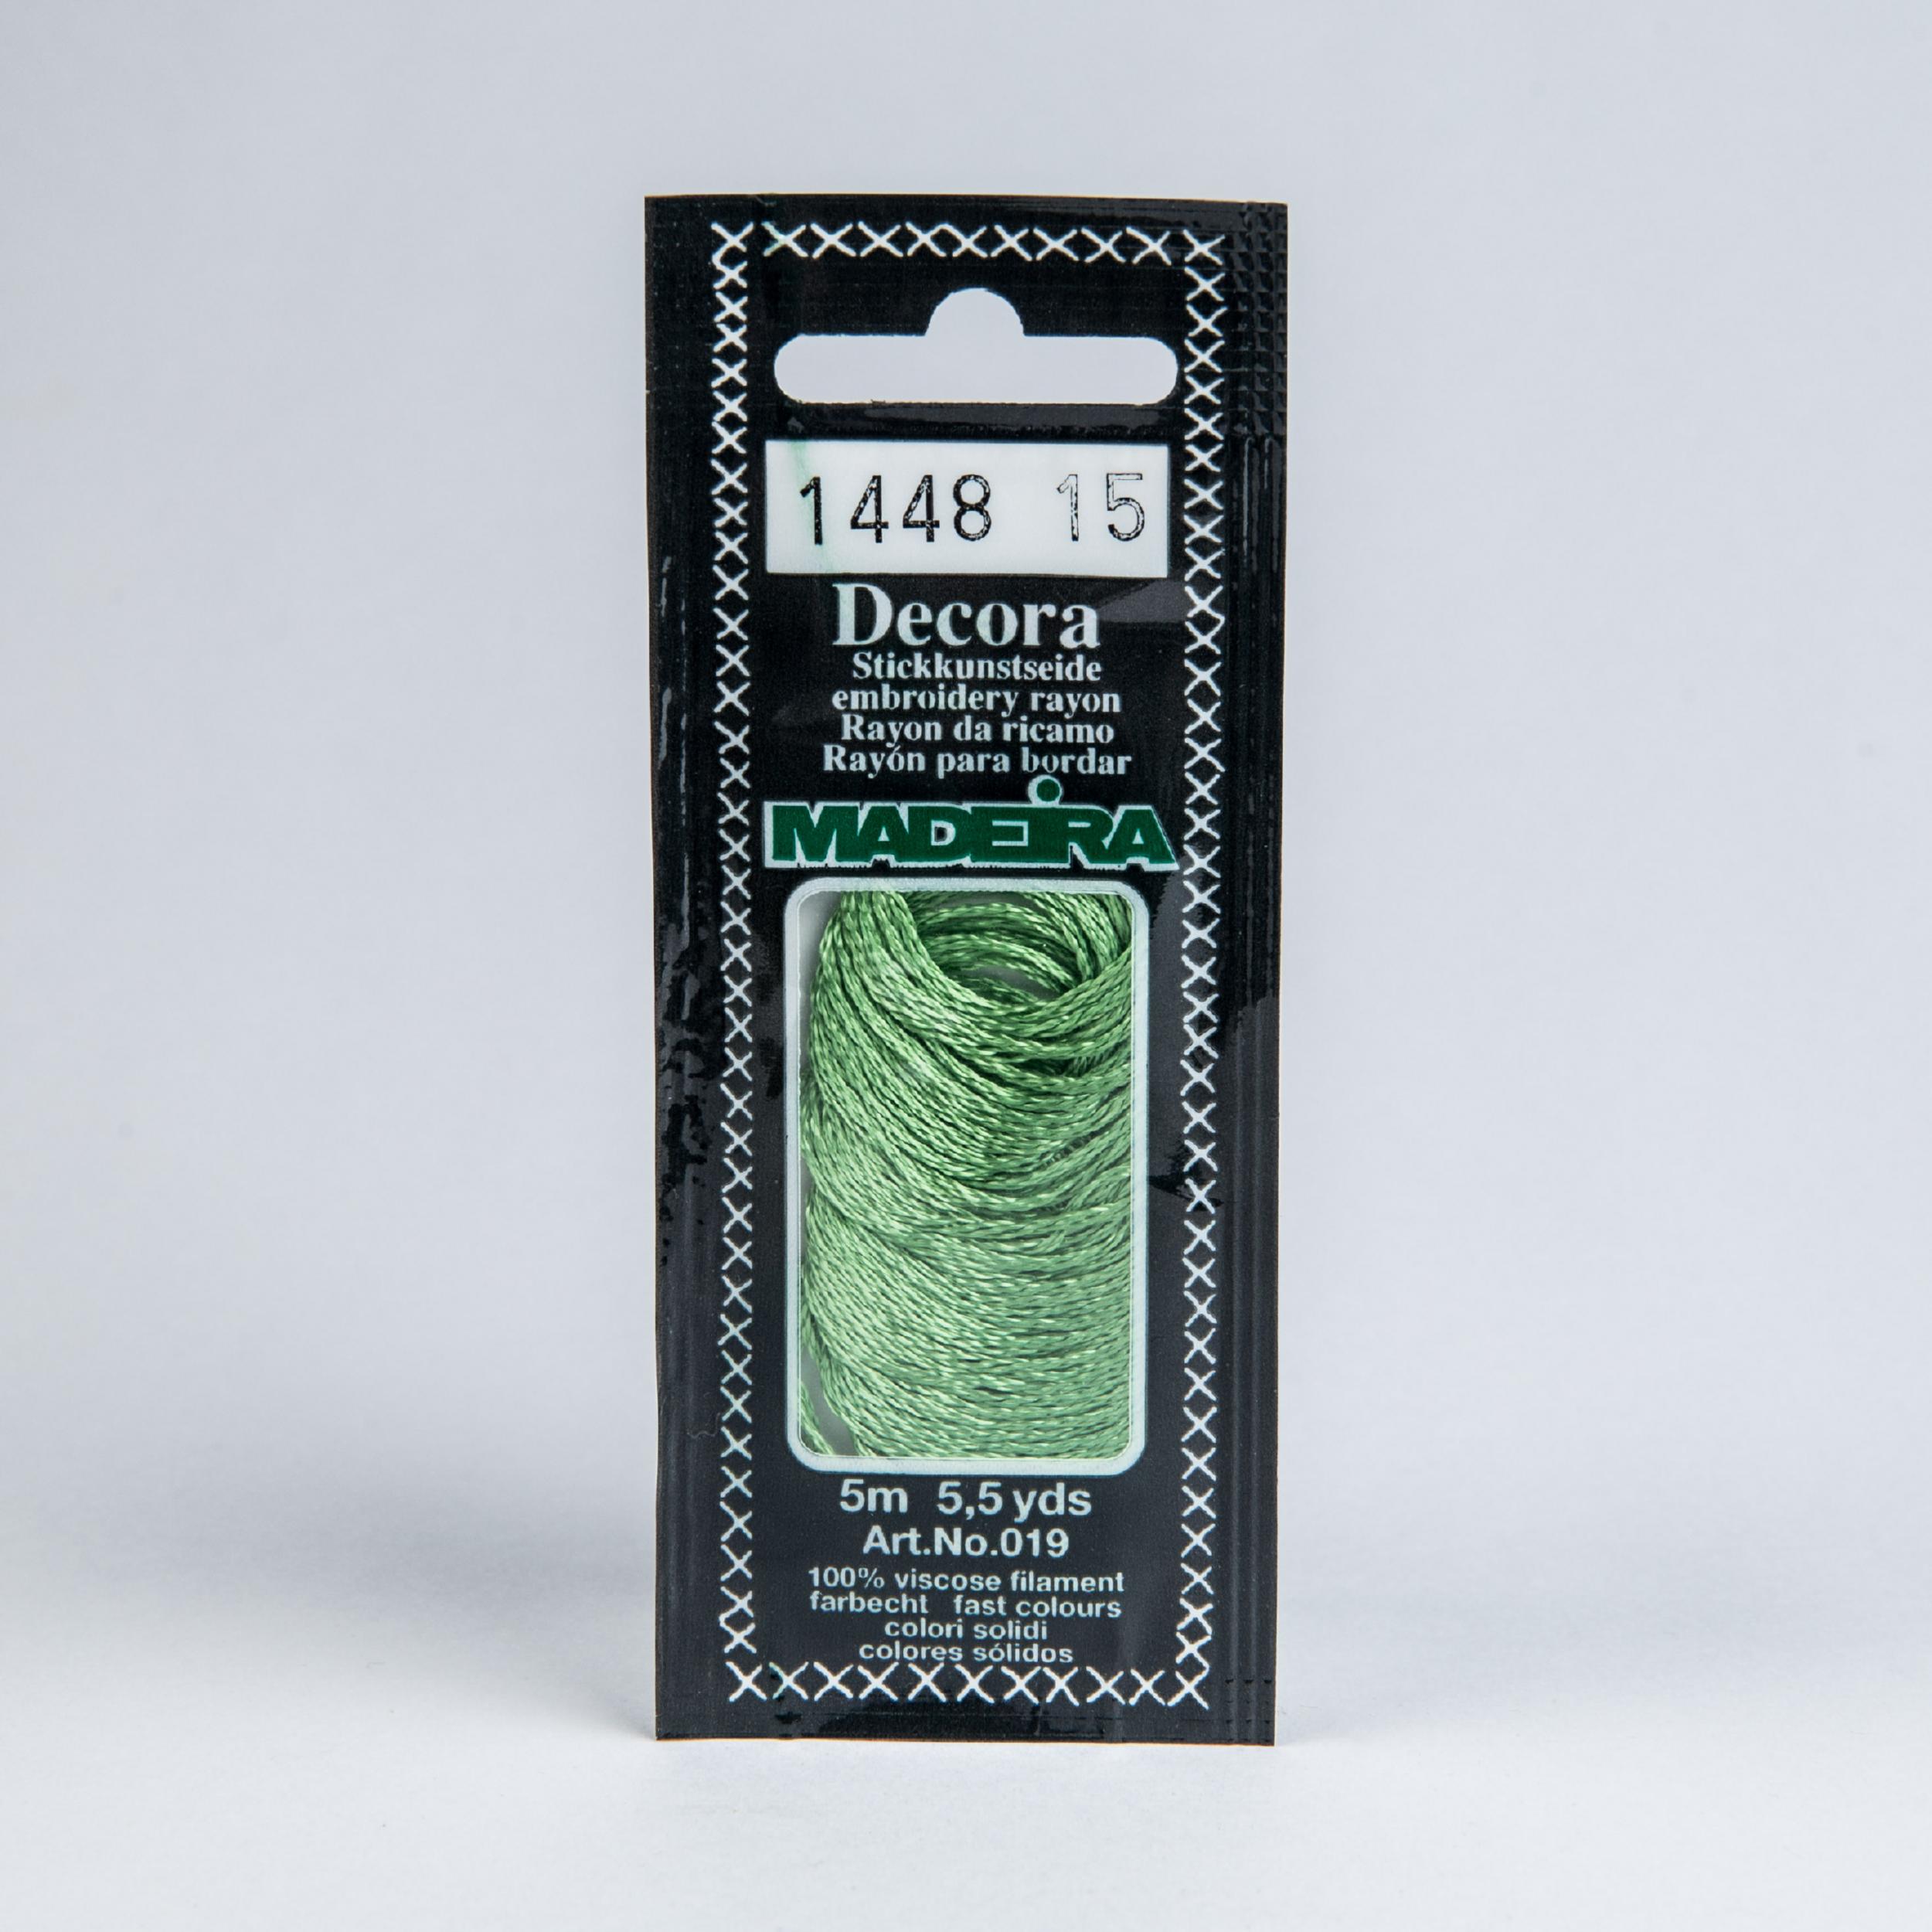 1448 Decora Madeira 5 m 4-х шарові філамент 100% віскоза